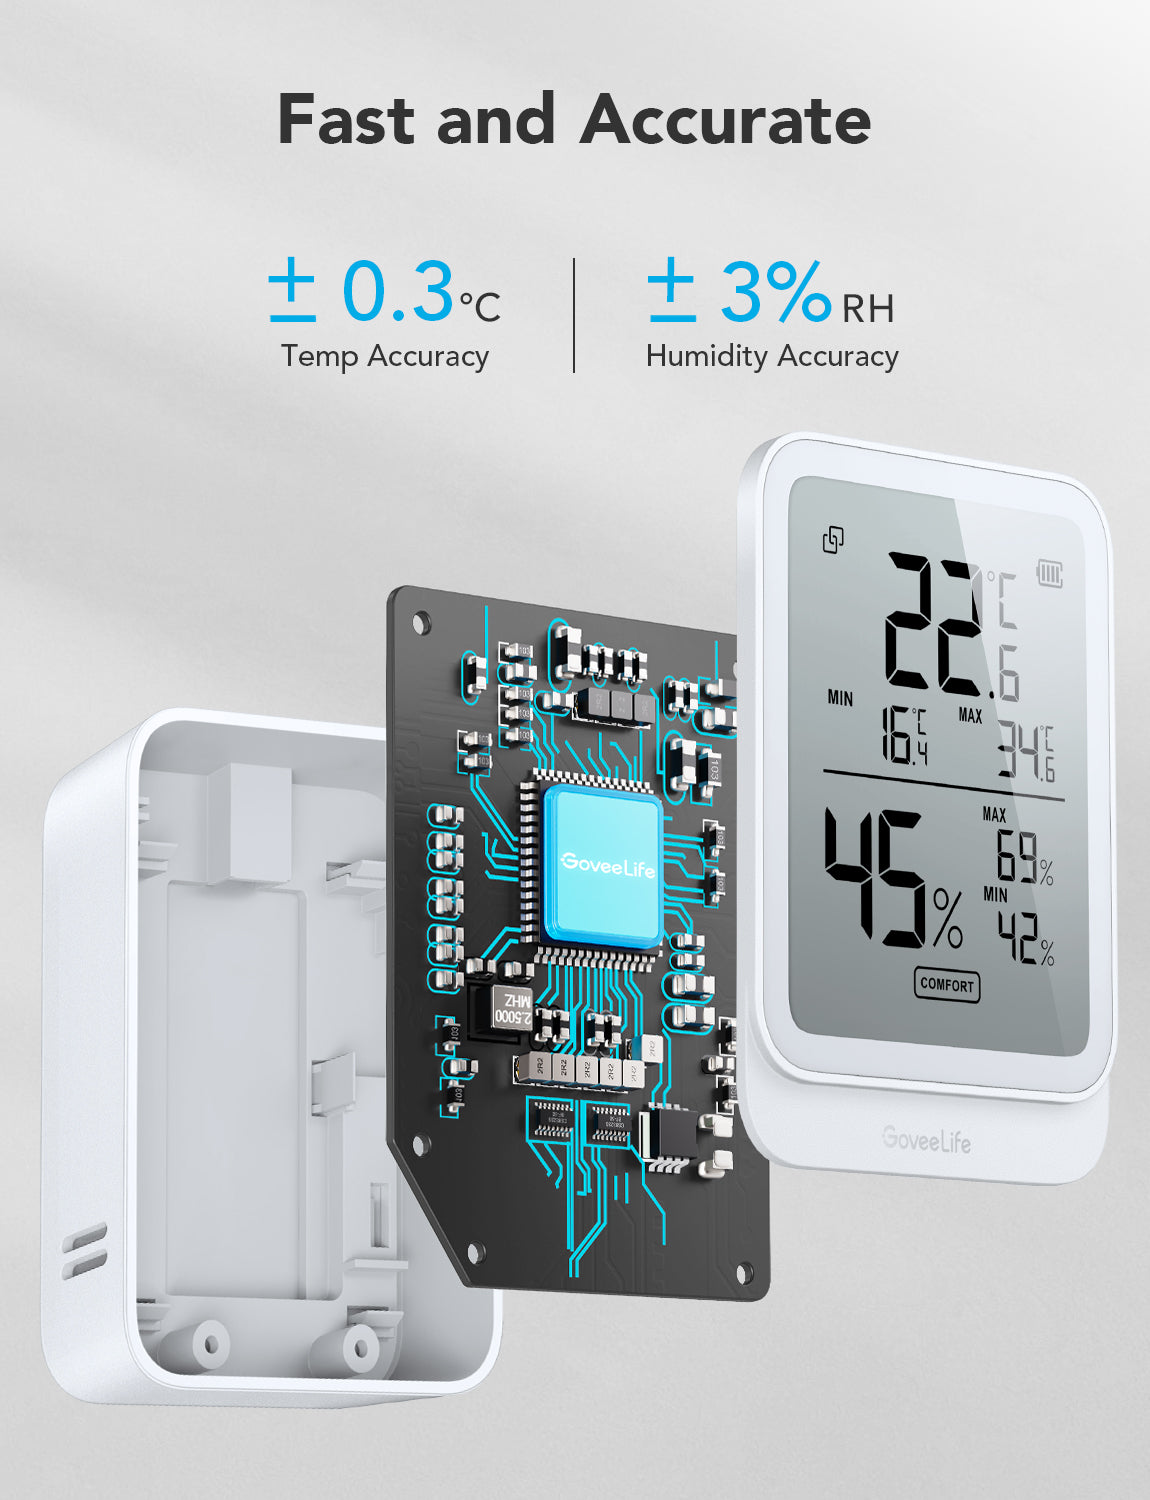 GoveeLife Bluetooth Hygrometer Thermometer-White